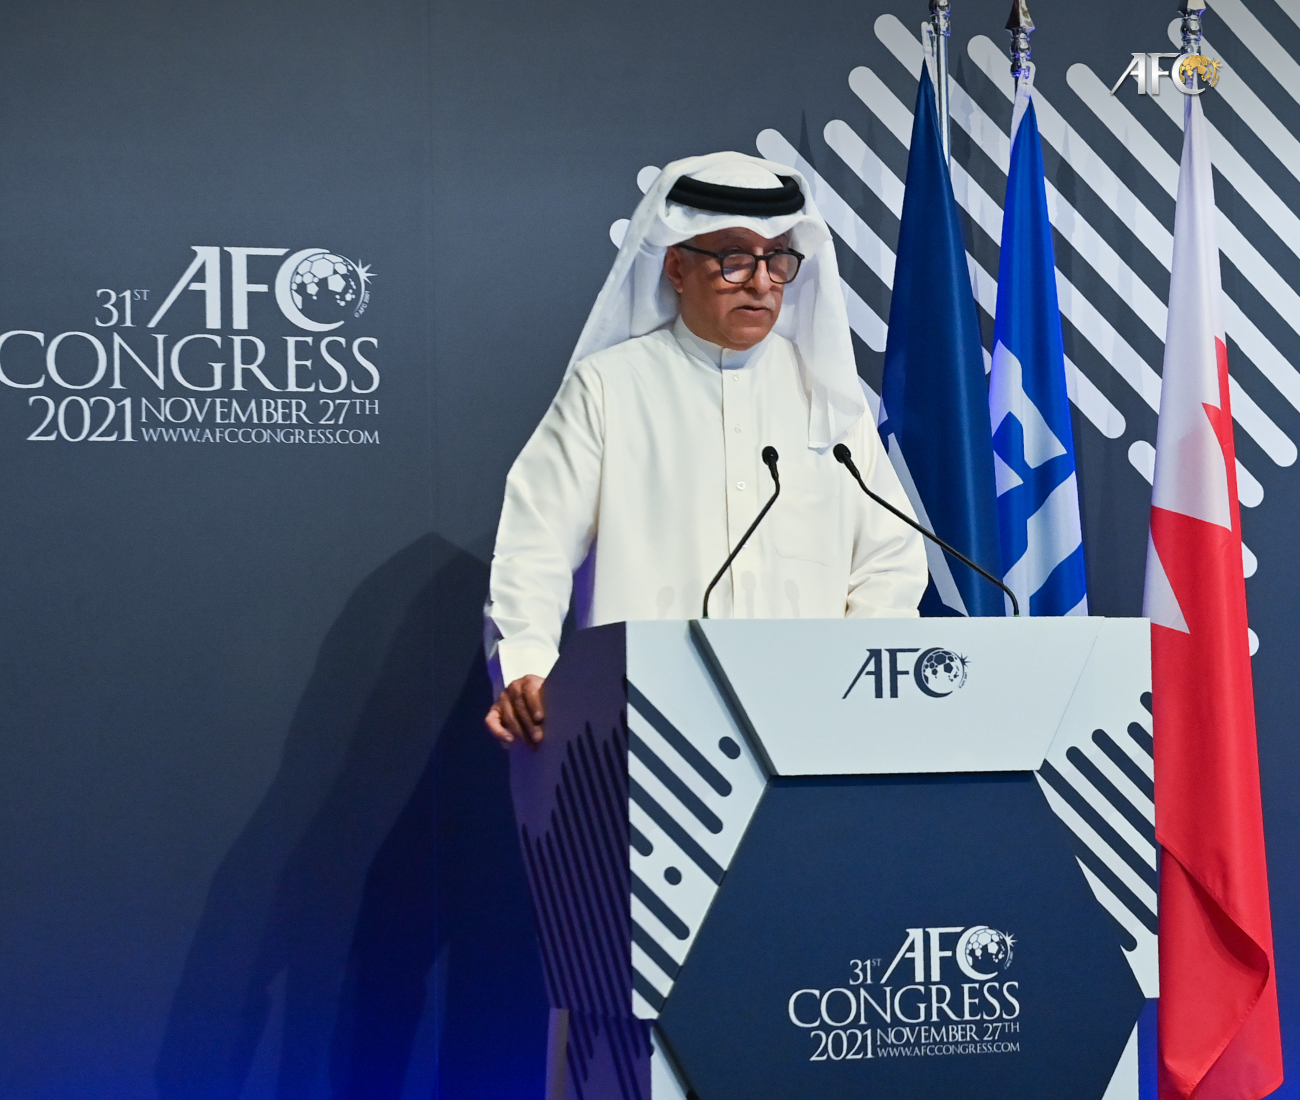 AFC President Shaikh Salman bin Ebrahim Al Khalifa said the organisation will help Qatar deliver a successful FIFA World Cup ©AFC